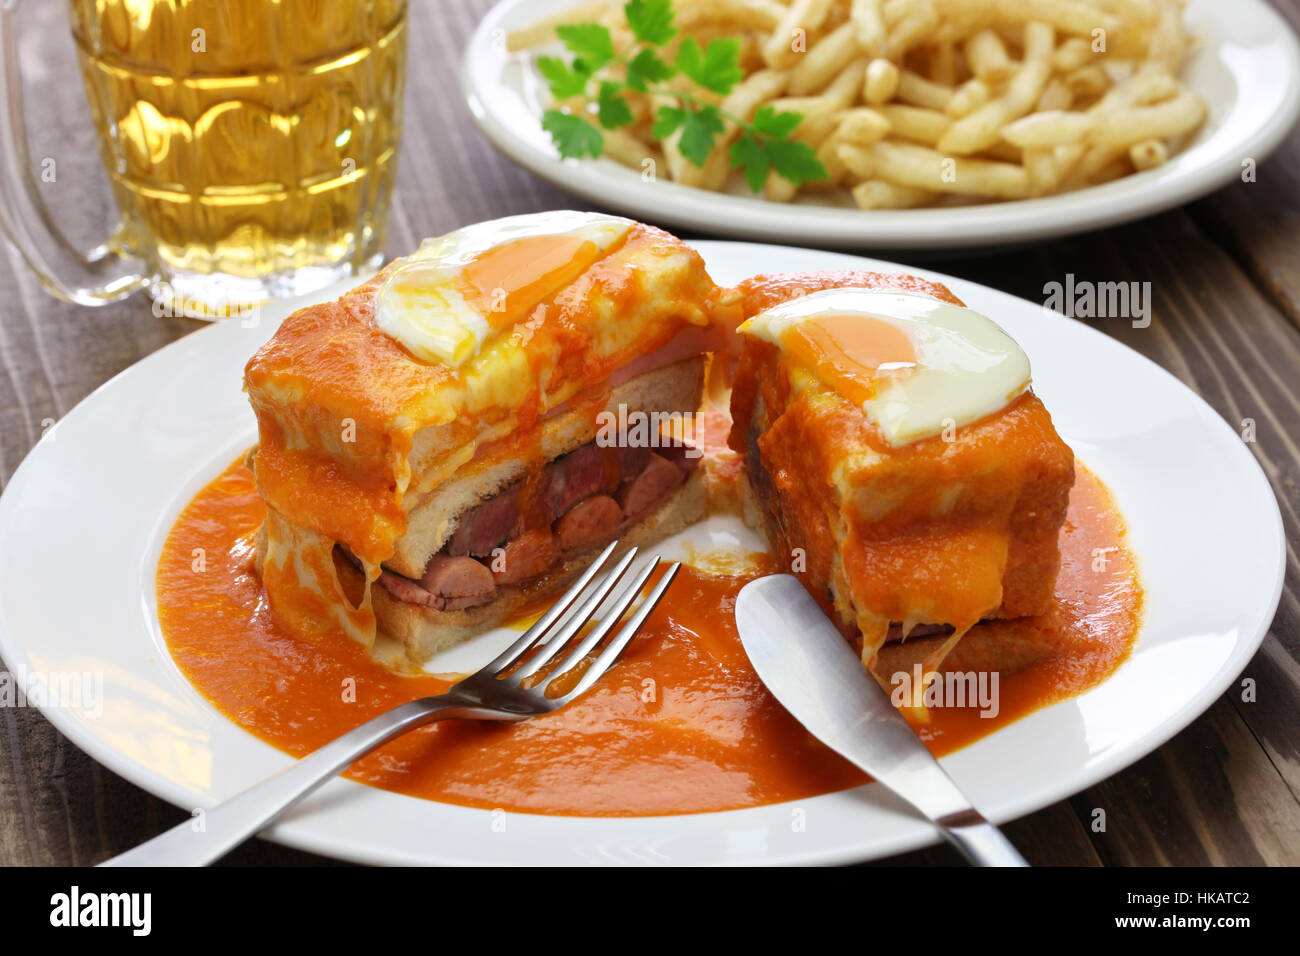 Francesinha fatti in casa, sandwich portoghese e patatine fritte Foto stock  - Alamy